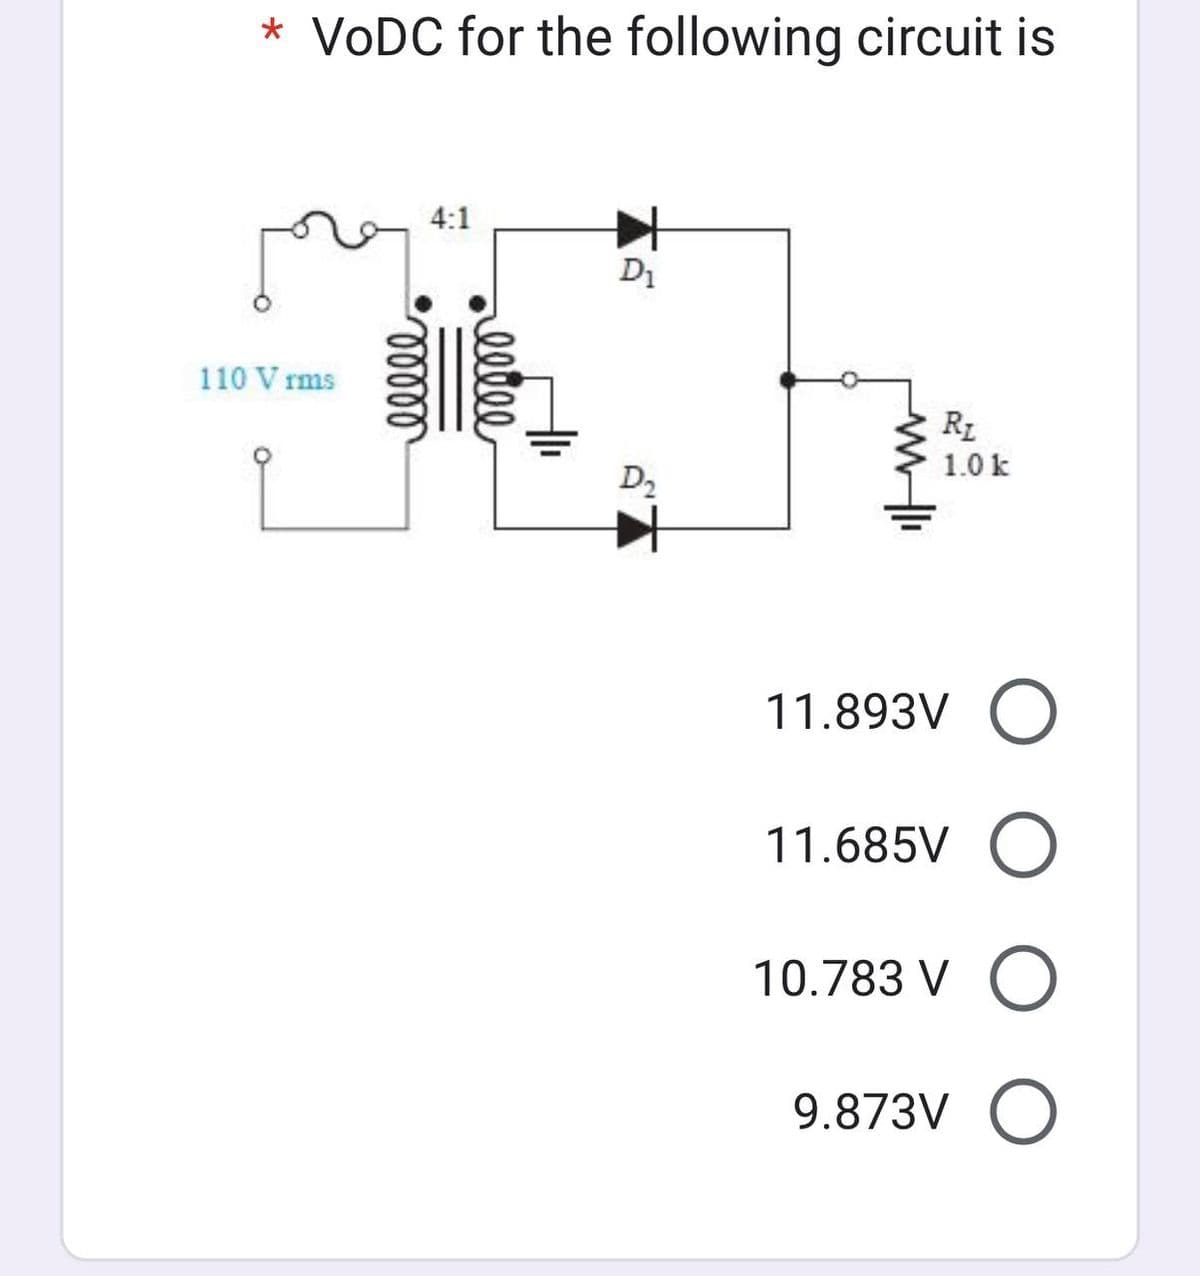 * VODC for the following circuit is
110 Vrms
q
4:1
ooooo
reetee
j
D₁
D₂
R₂
1.0 k
11.893V O
11.685V O
10.783 V O
9.873V O